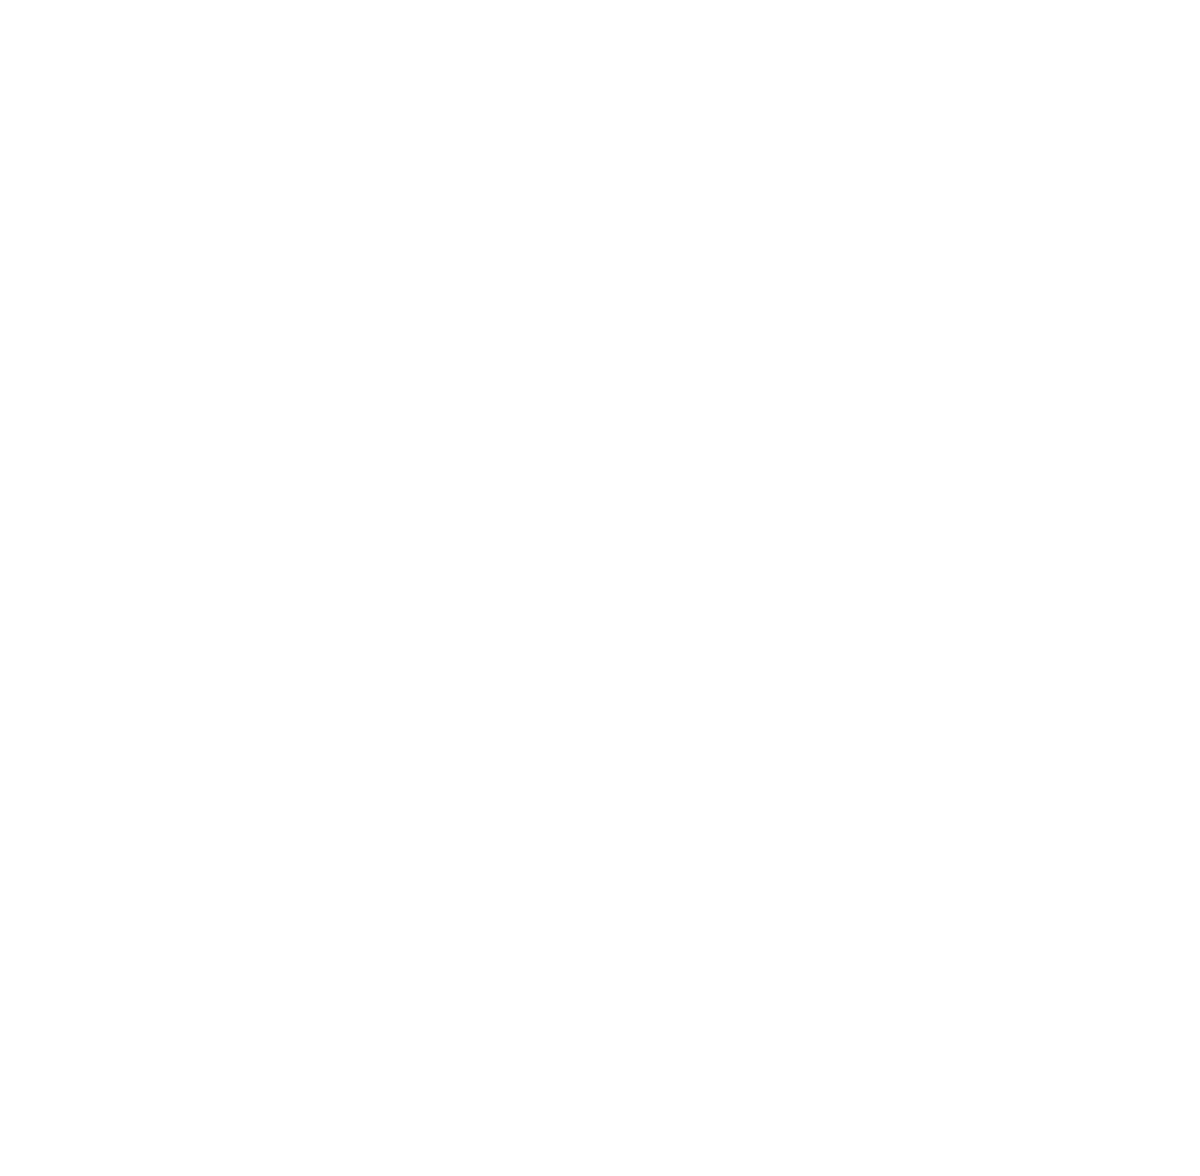 Gordon-Highlander-Ranked-28-by-DBJ-North-Texas-General-Contractors-List